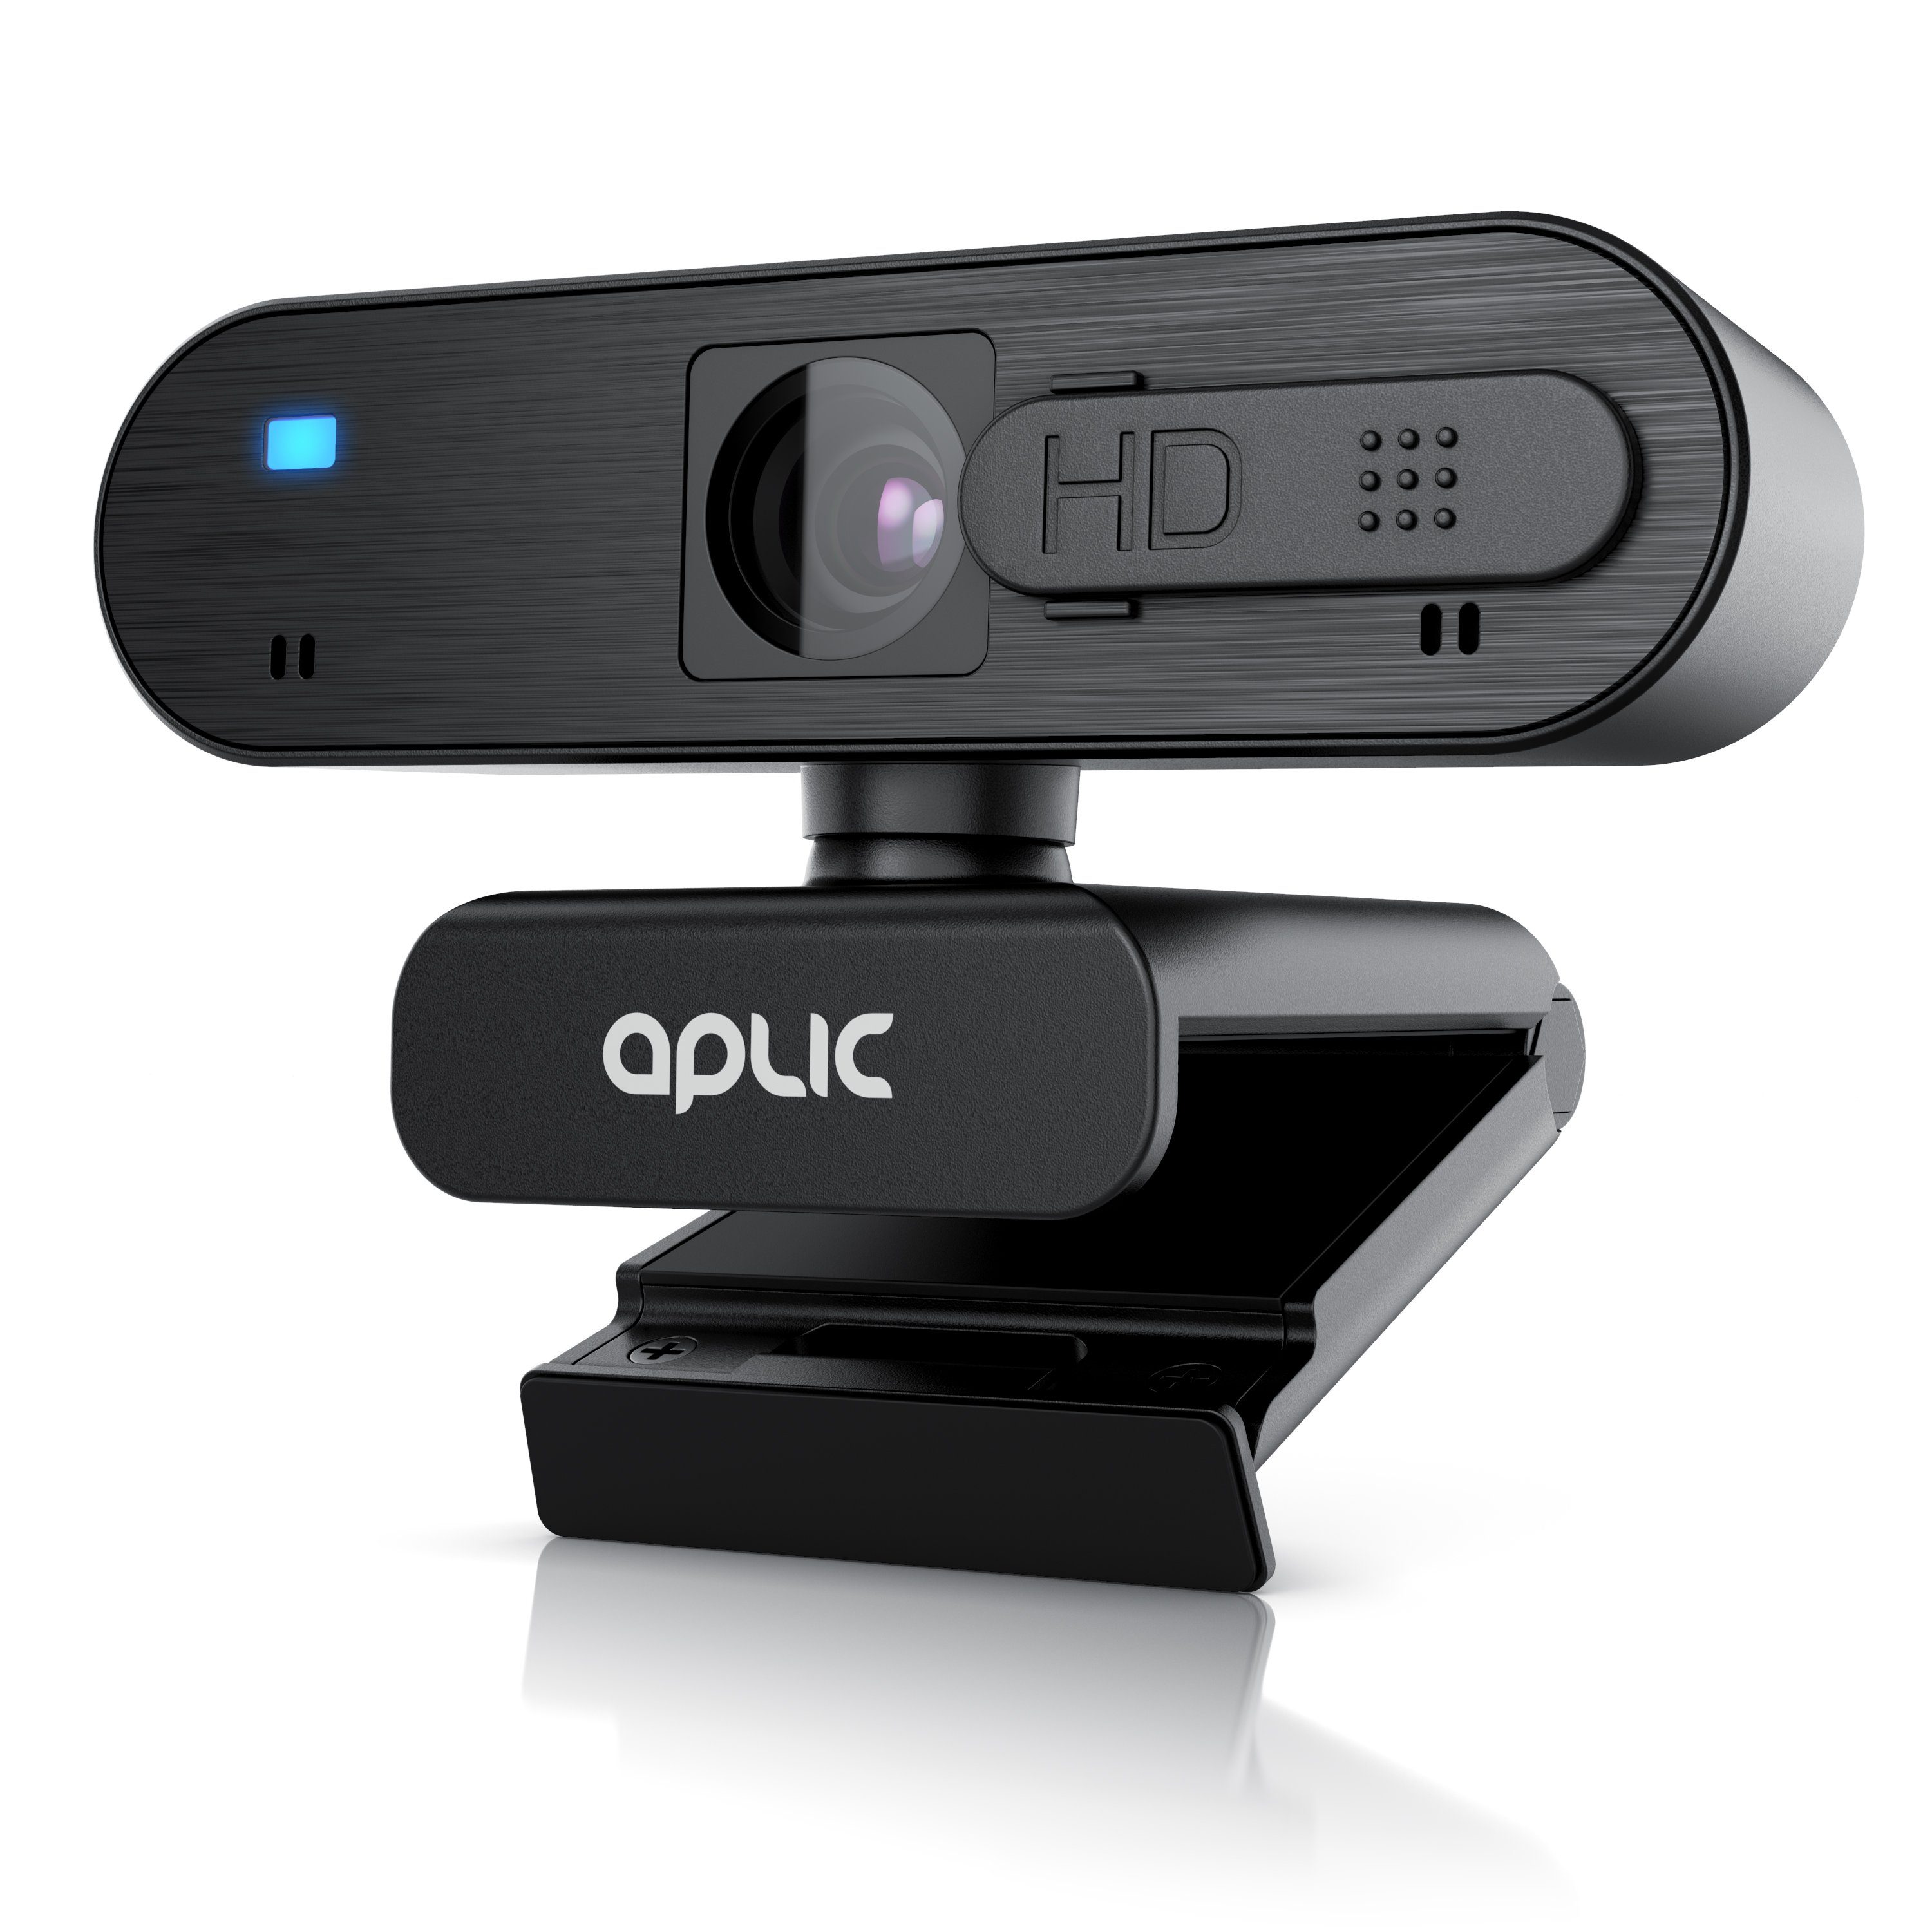 Aplic Full HD-Webcam (Full HD, 1920x1080@30Hz, Autofokus, Privacy Shutter Sichtschutz, Stereomikrofon) schwarz1